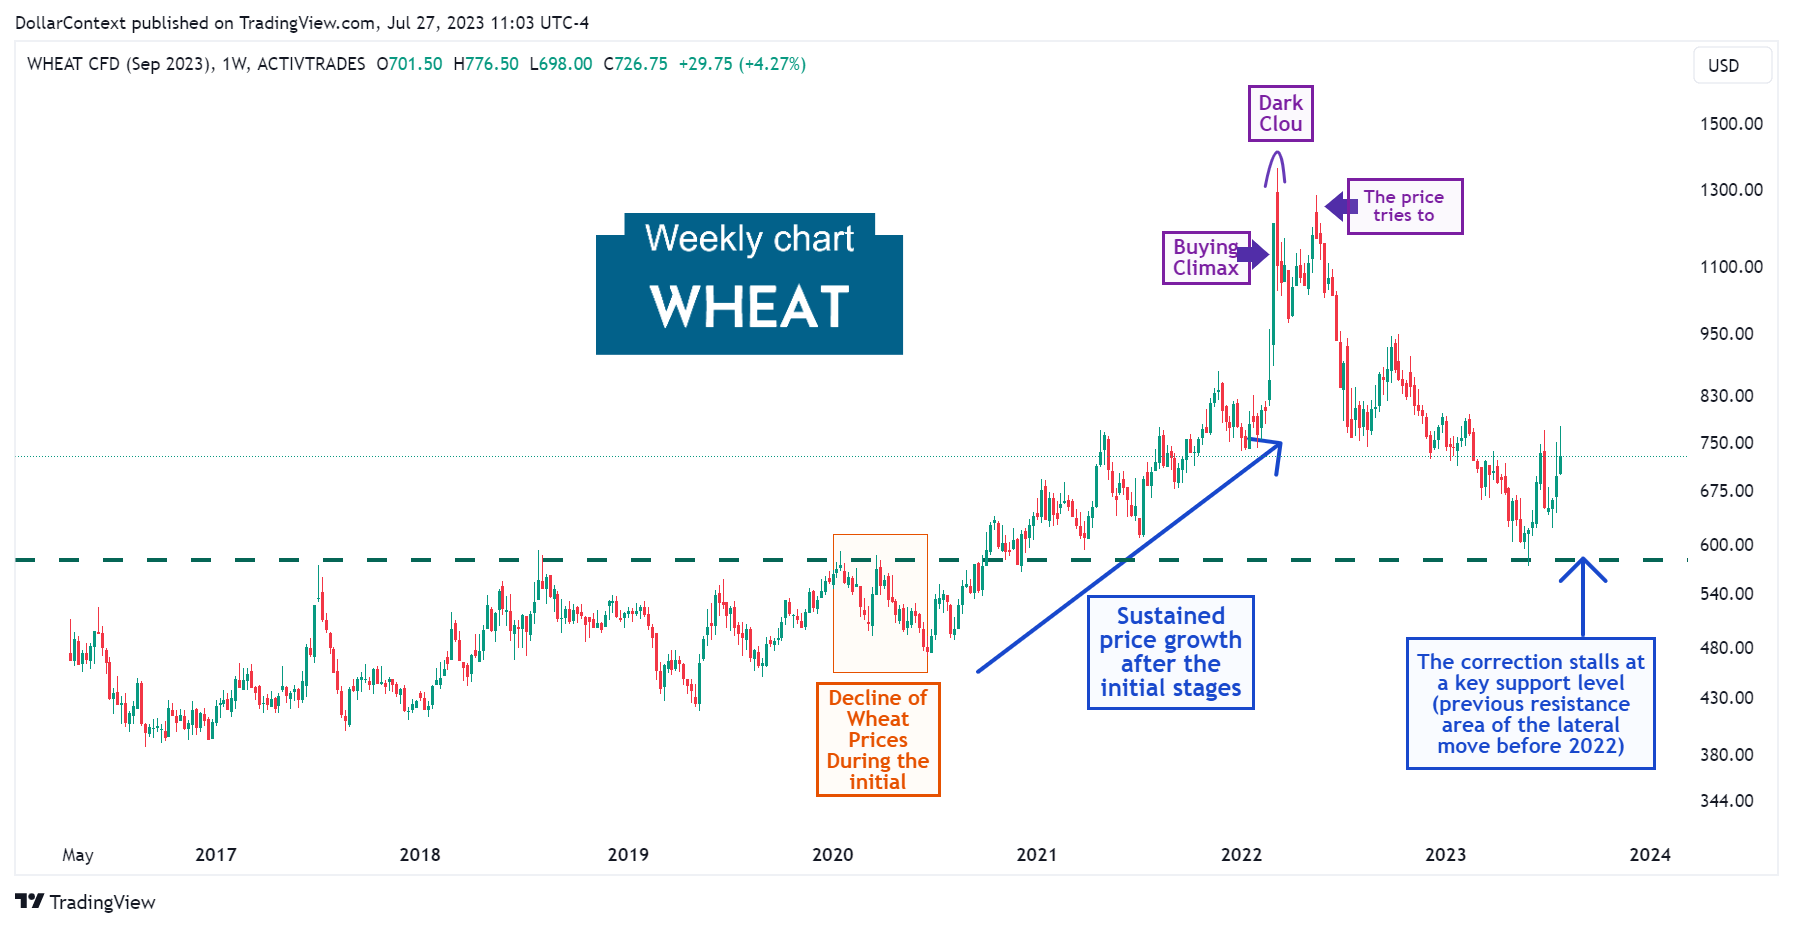 Wheat Market: Correction Since June 2022